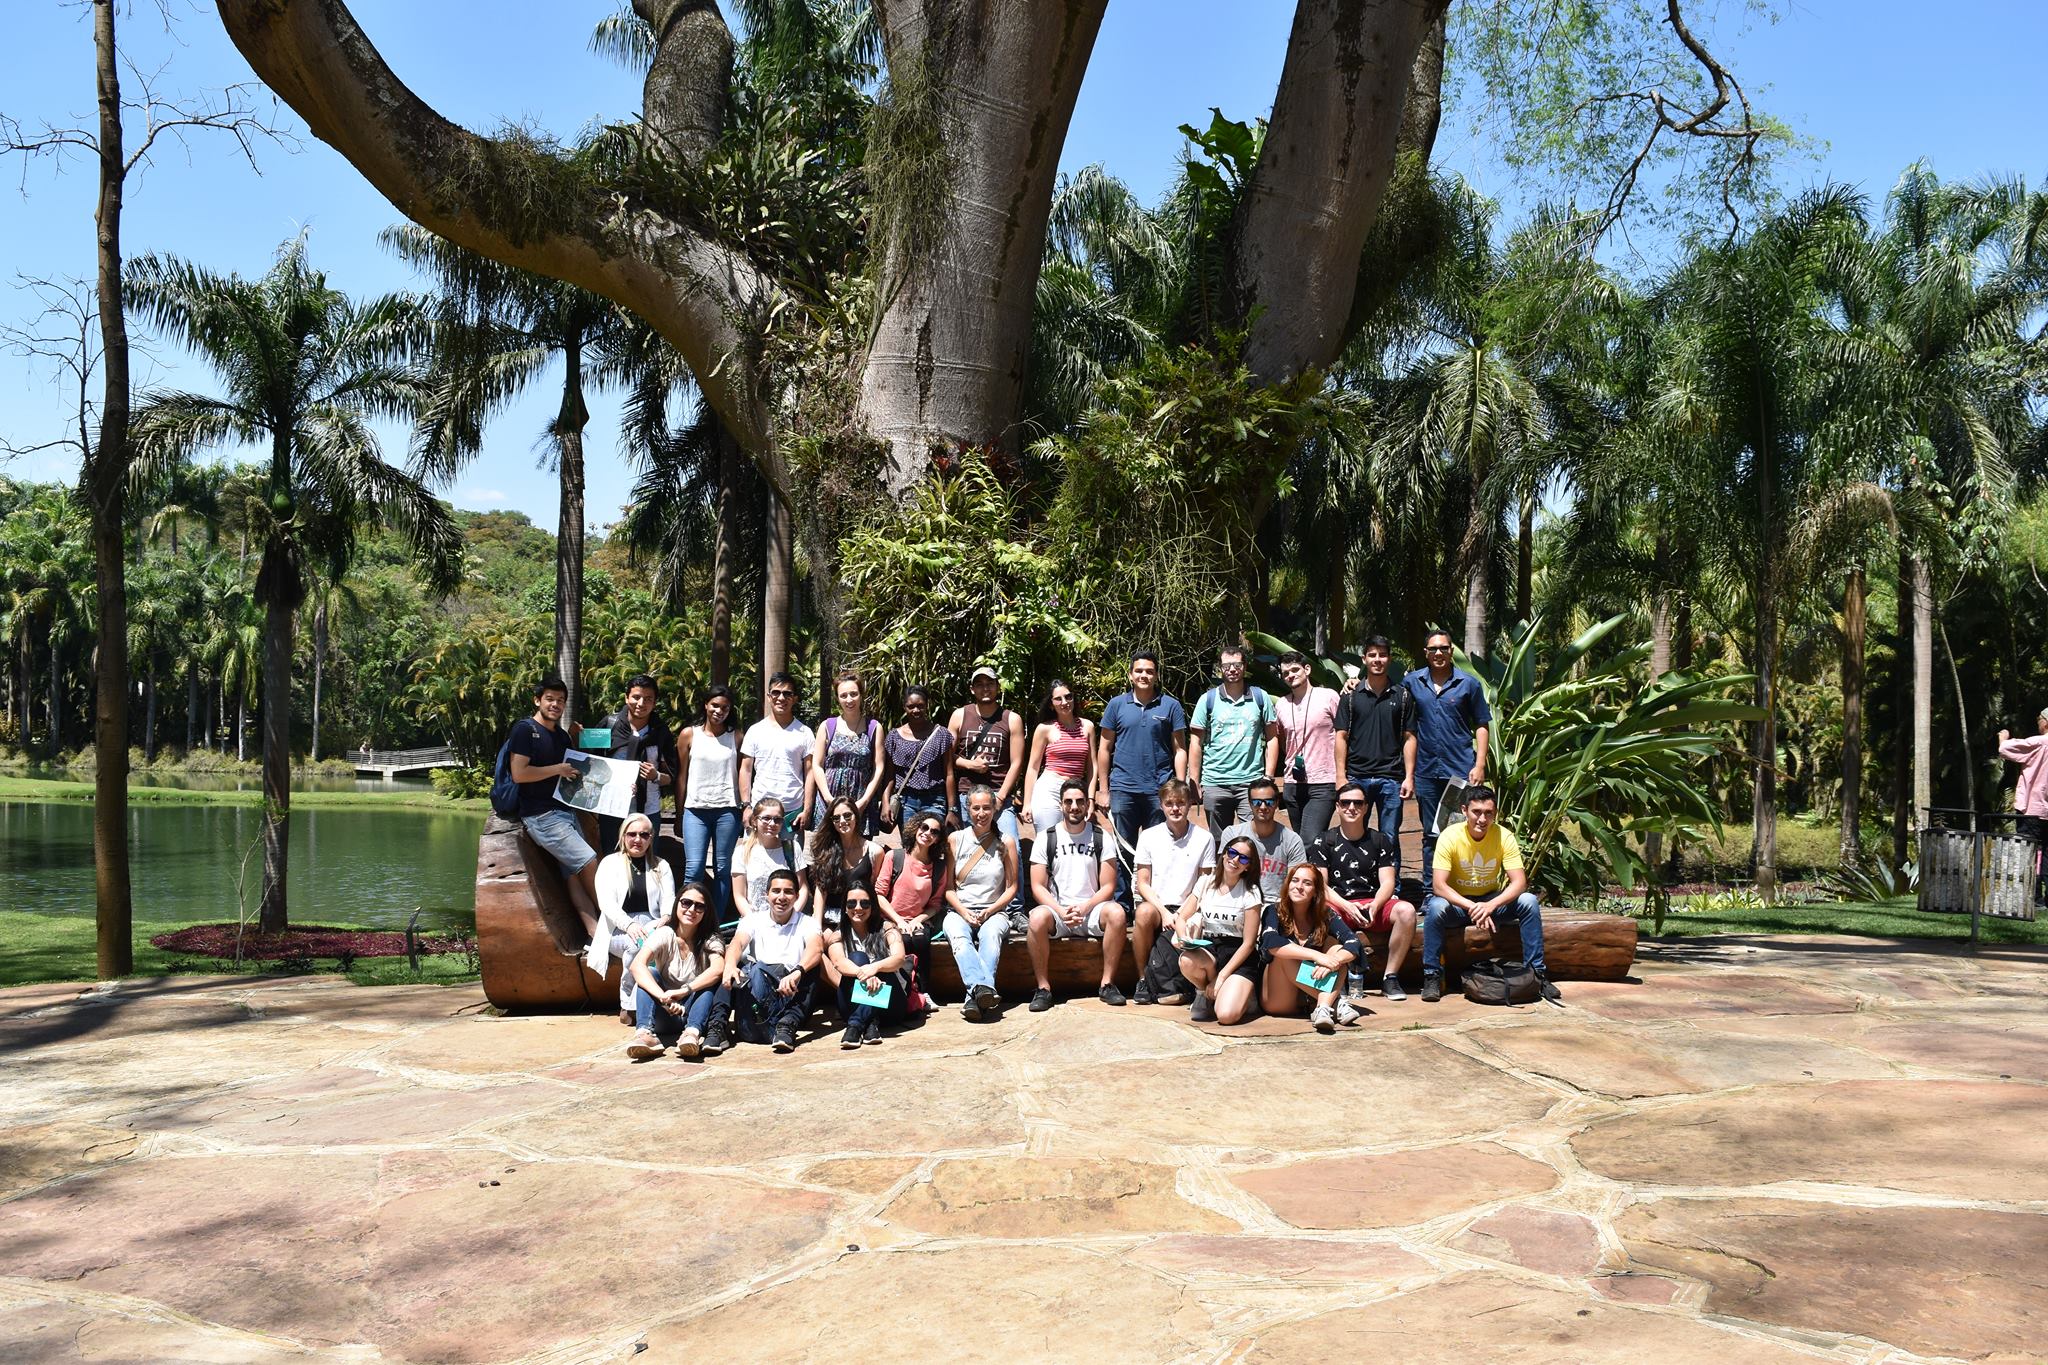 UFOP's International Students on trip to Inhotim